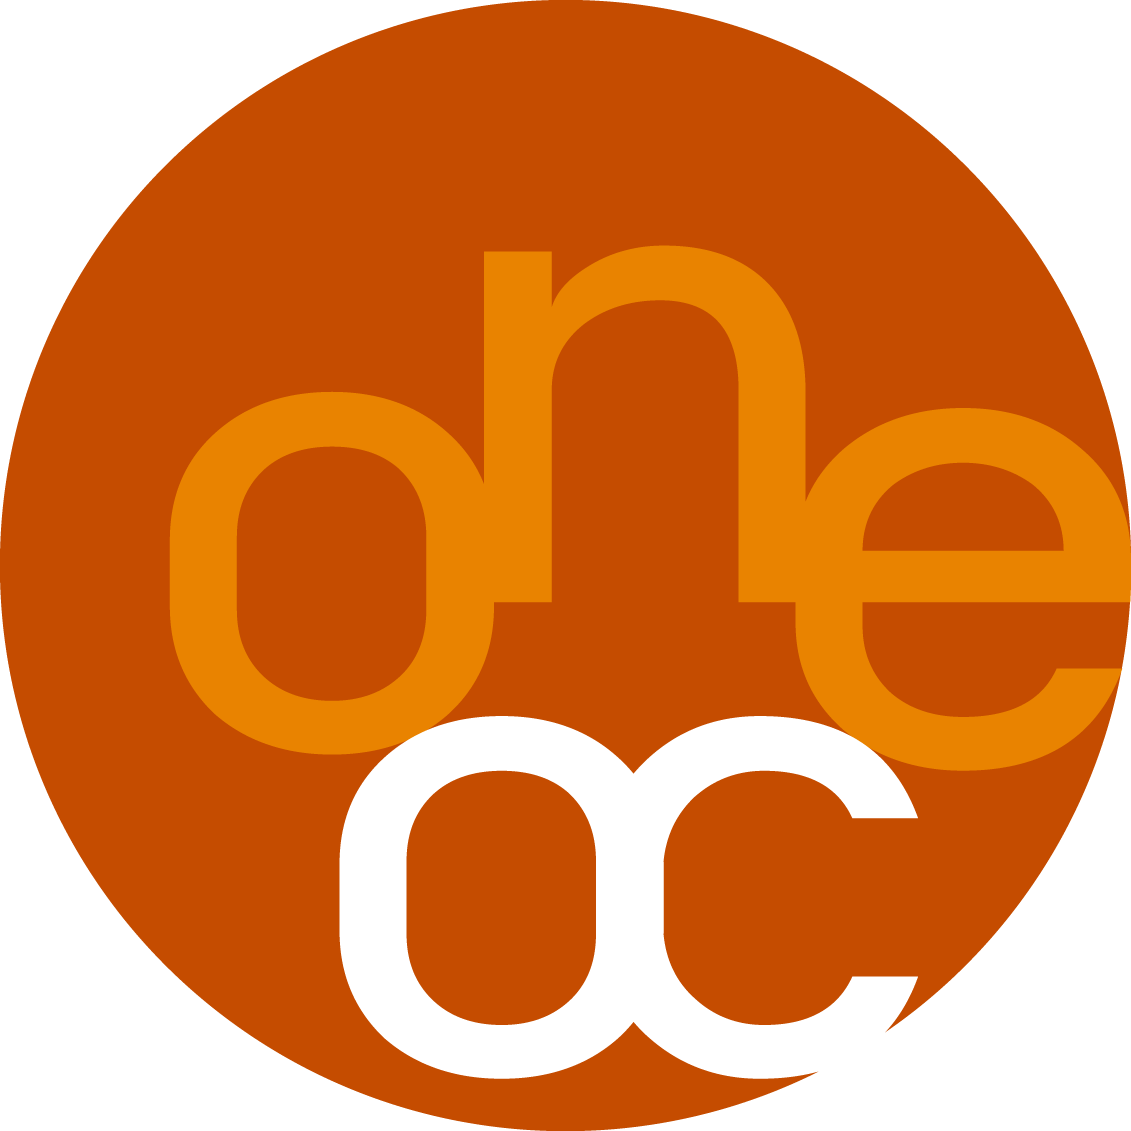 ONE OC logo